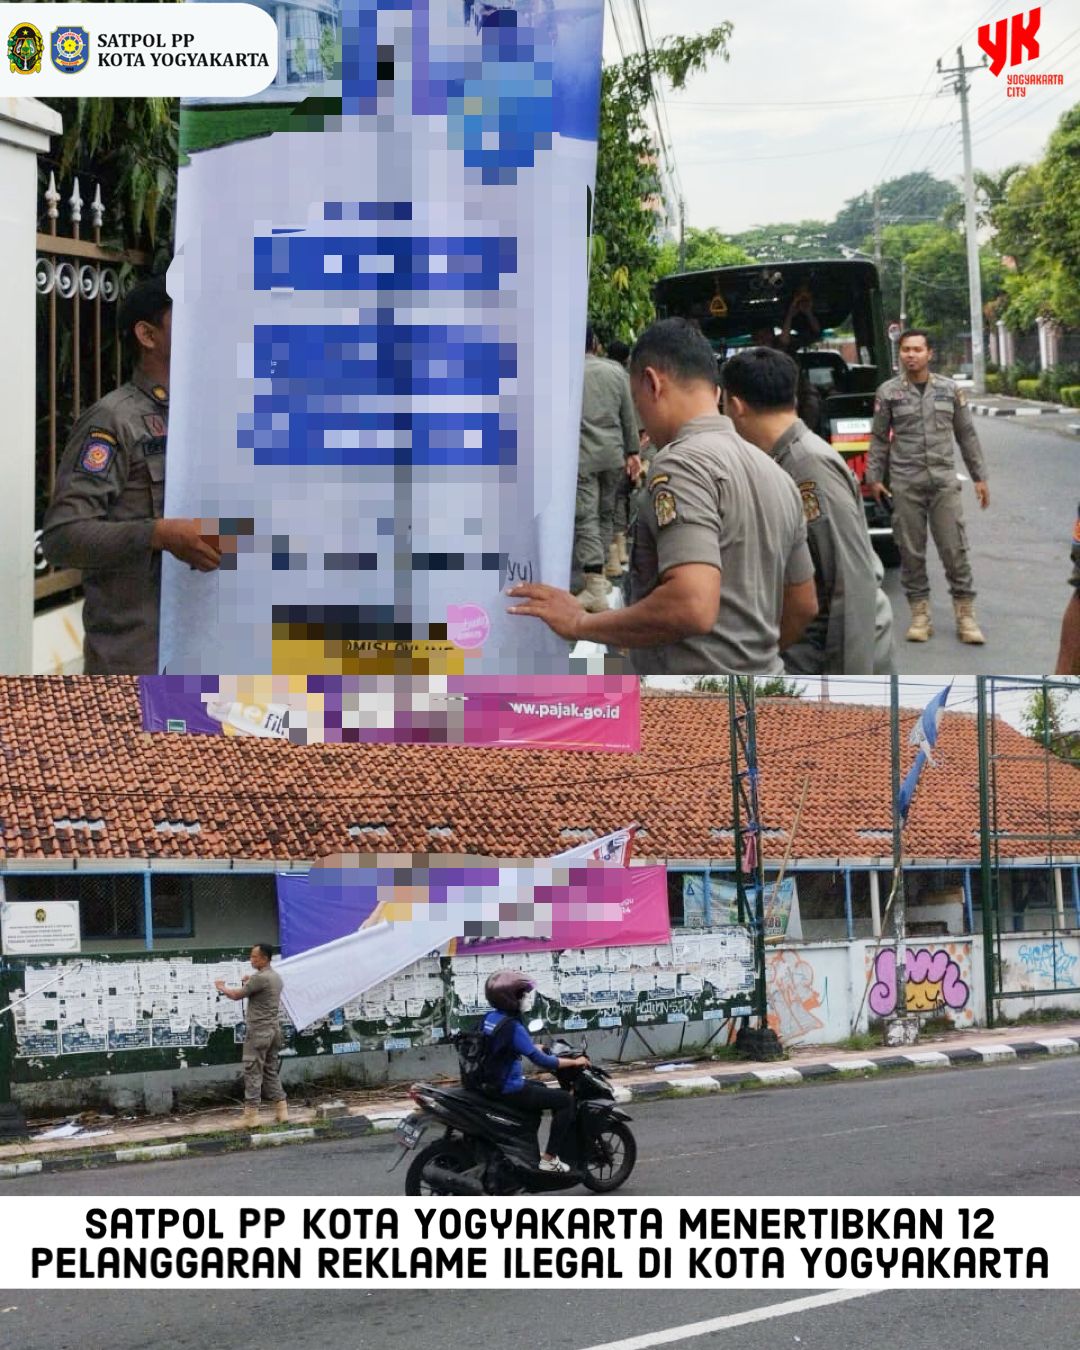 Satpol PP Kota Yogyakarta Menertibkan 12 Pelanggaran Reklame Ilegal di Wilayah Kota Yogyakarta.